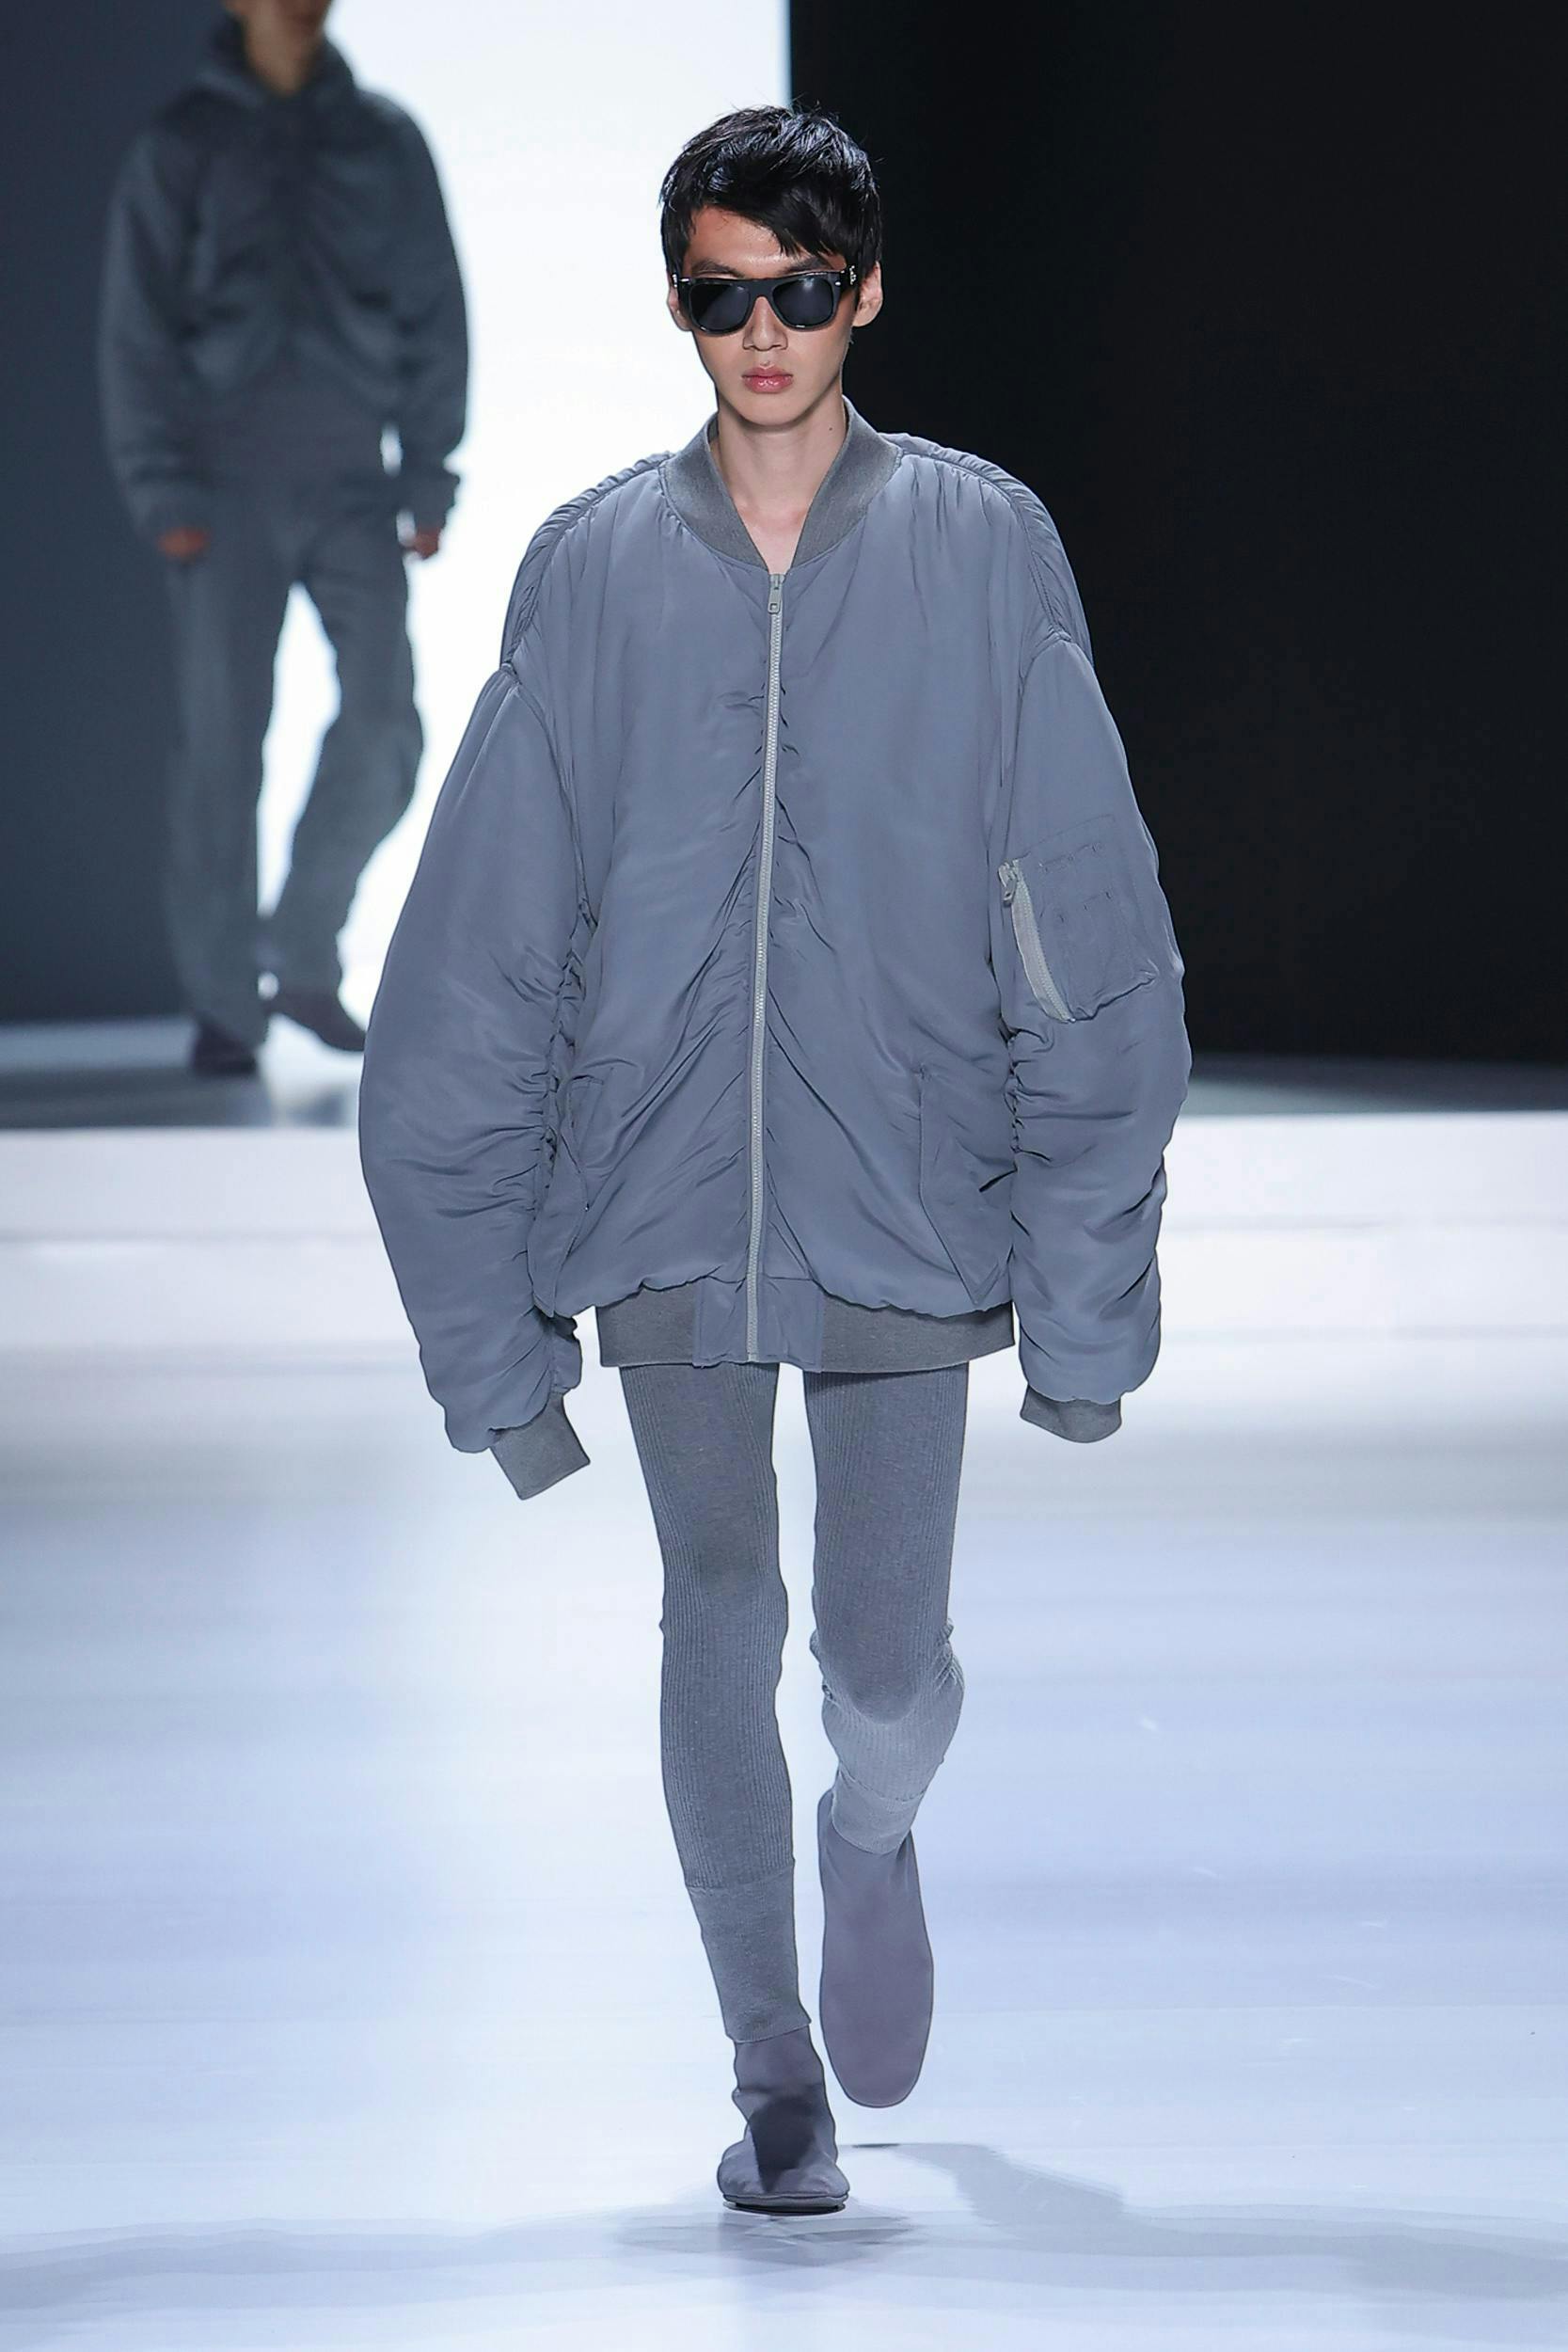 clothing coat fashion long sleeve jacket adult male man person shoe